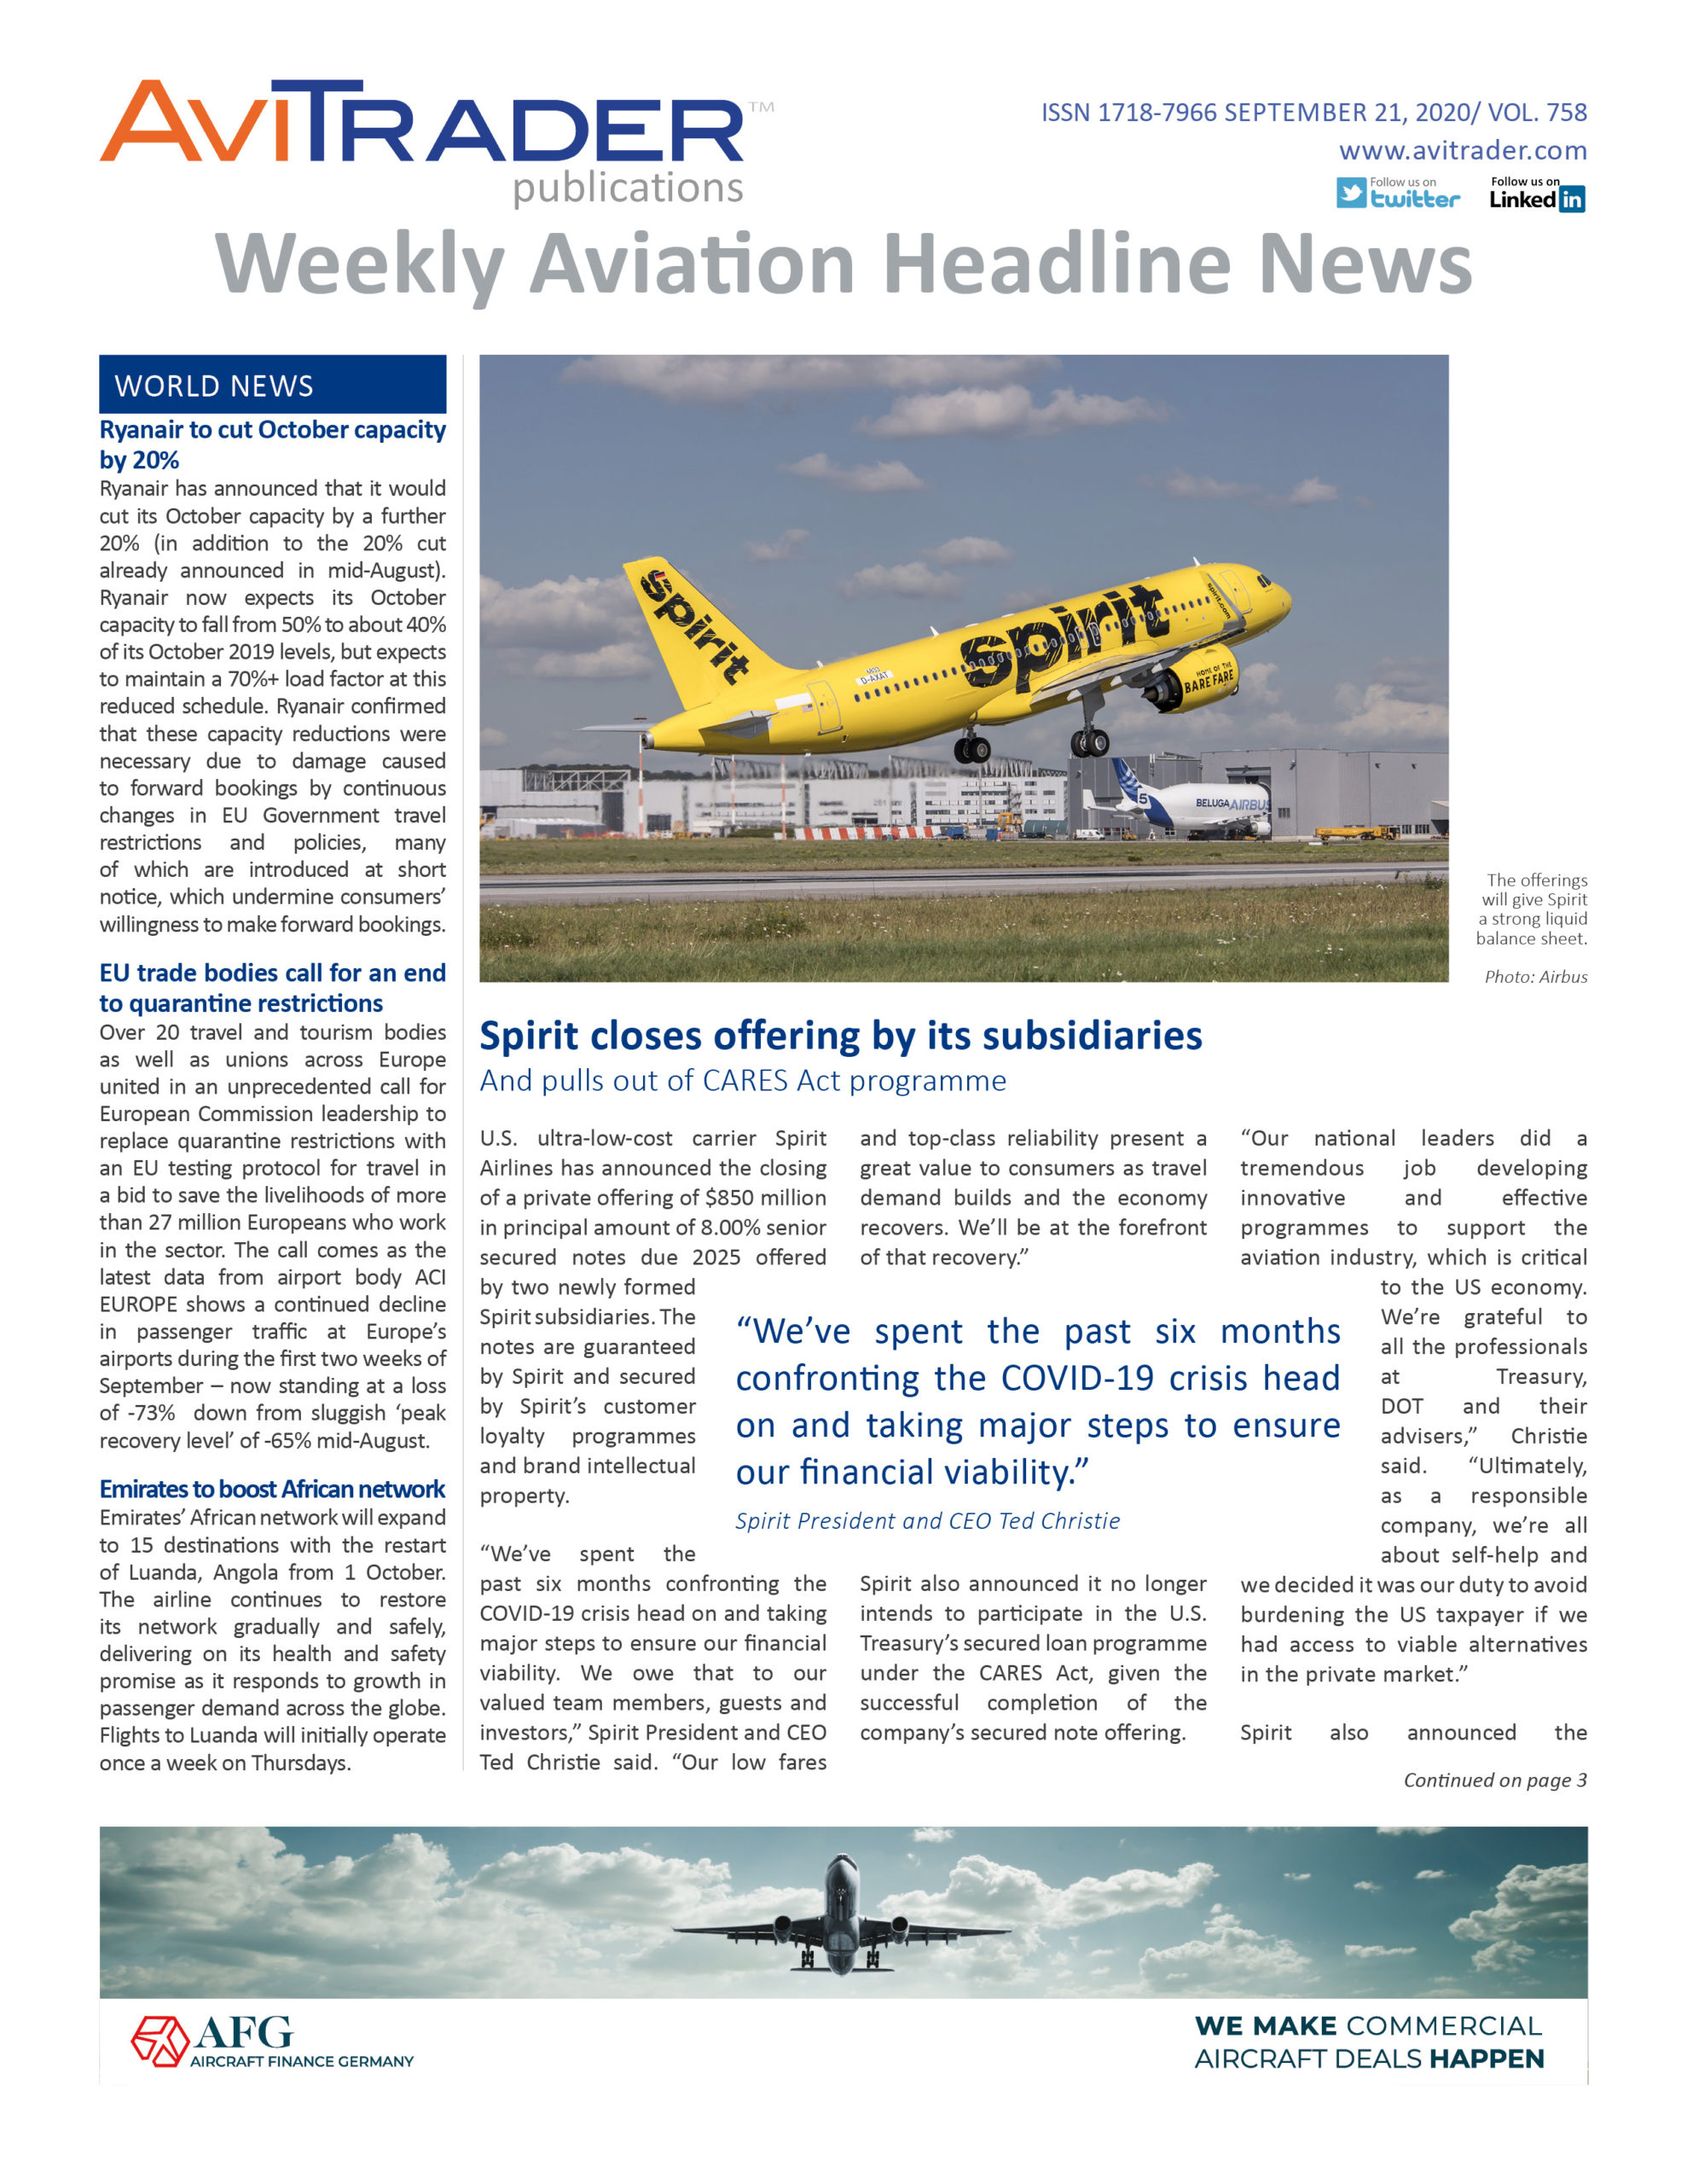 AviTrader_Weekly_Headline_News_Cover_2020-09-21